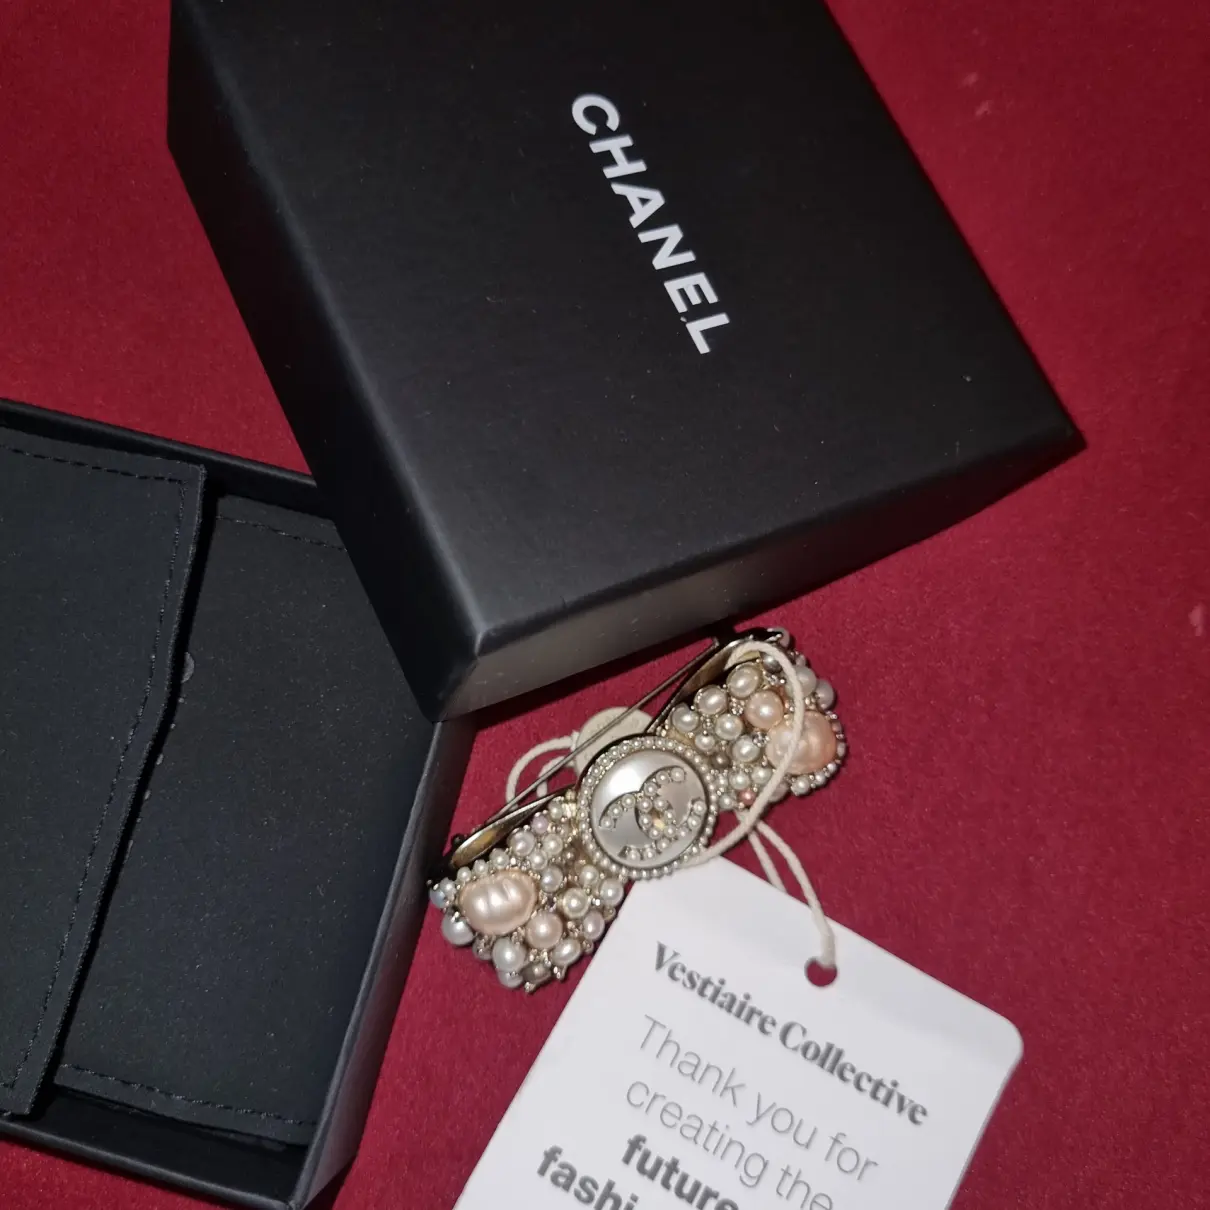 Baroque pin & brooche Chanel